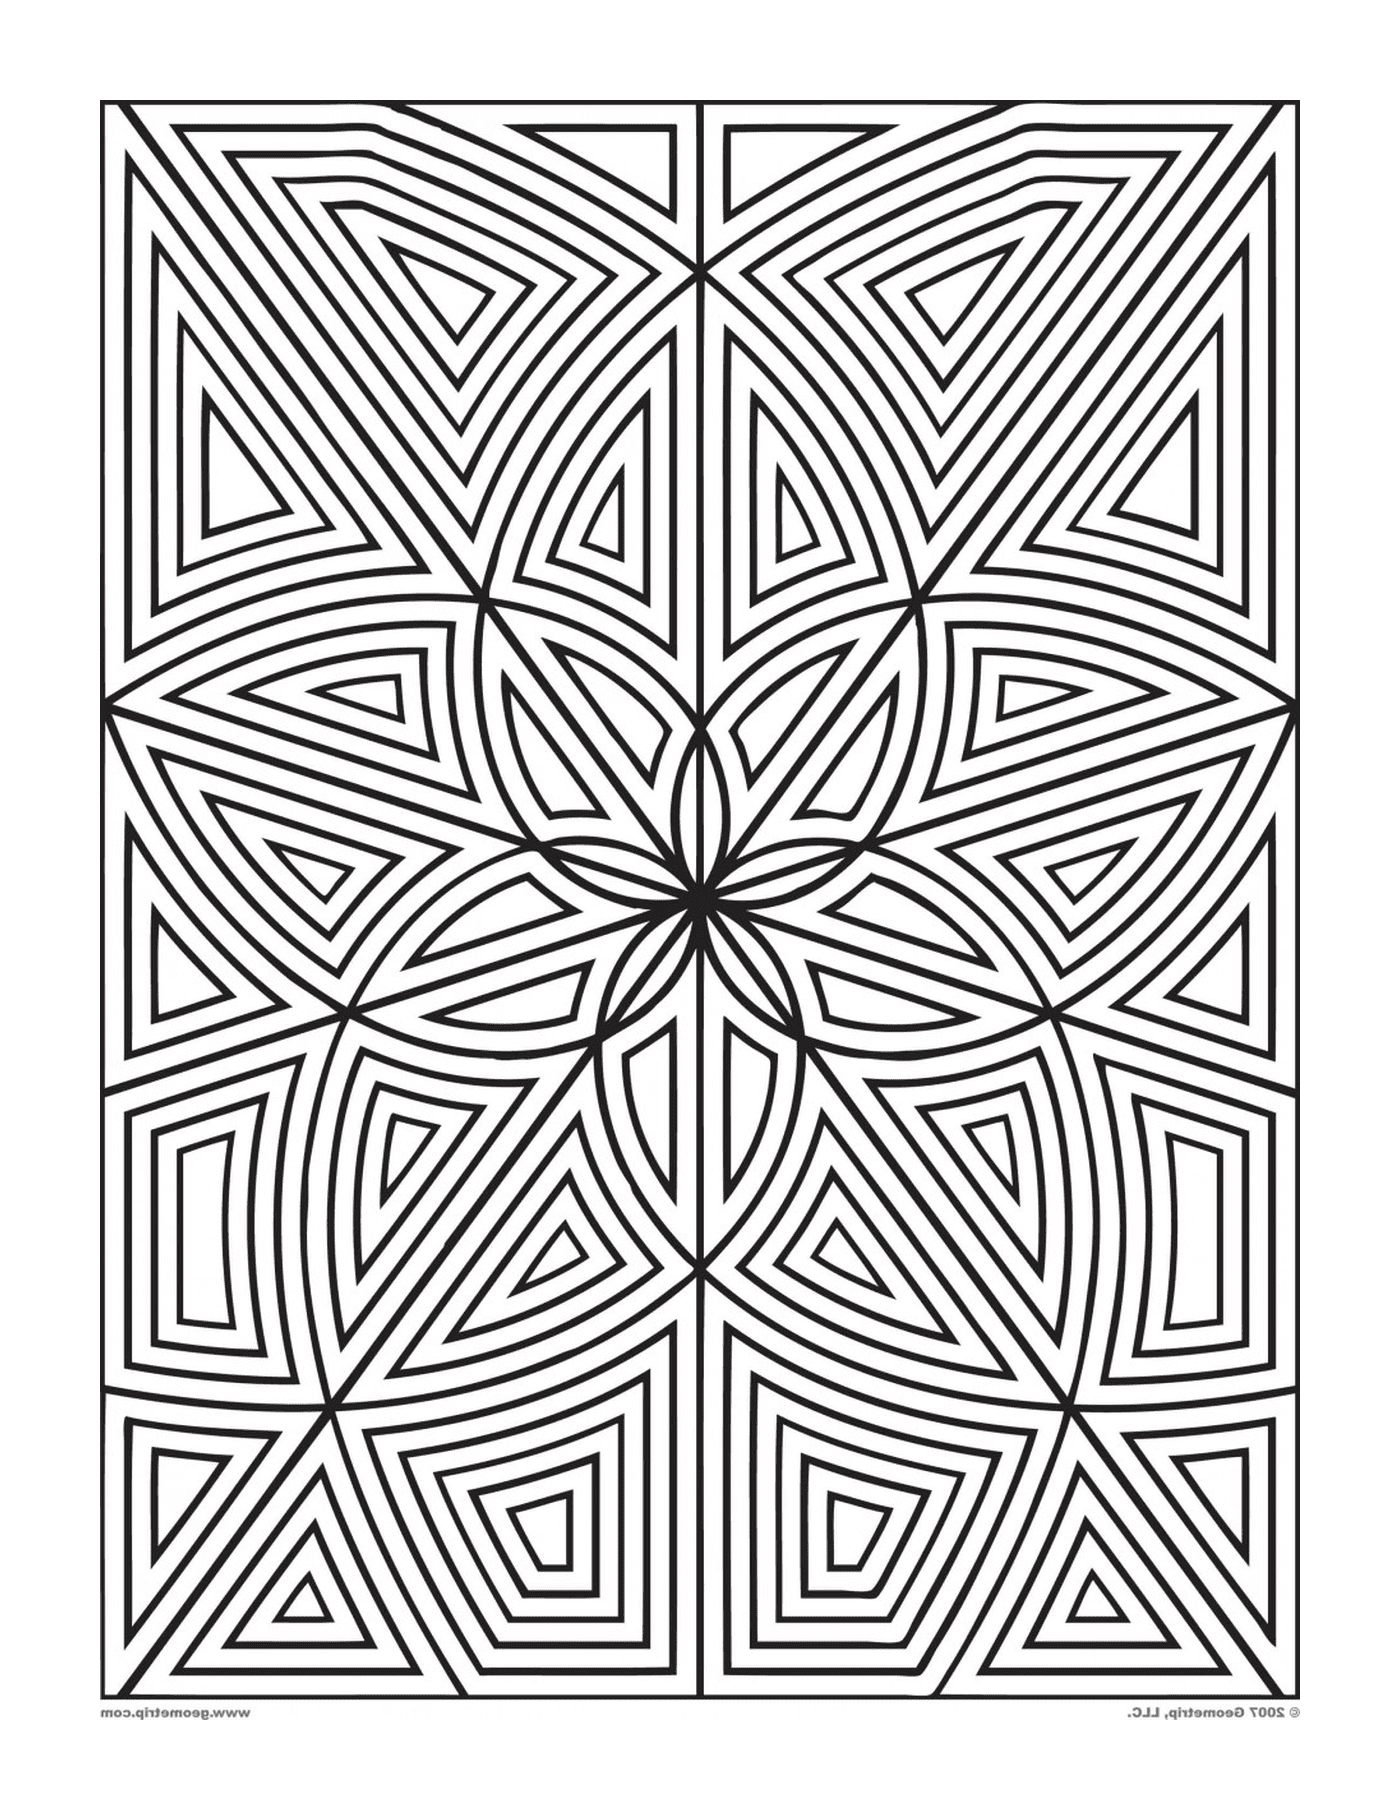  a geometric pattern 